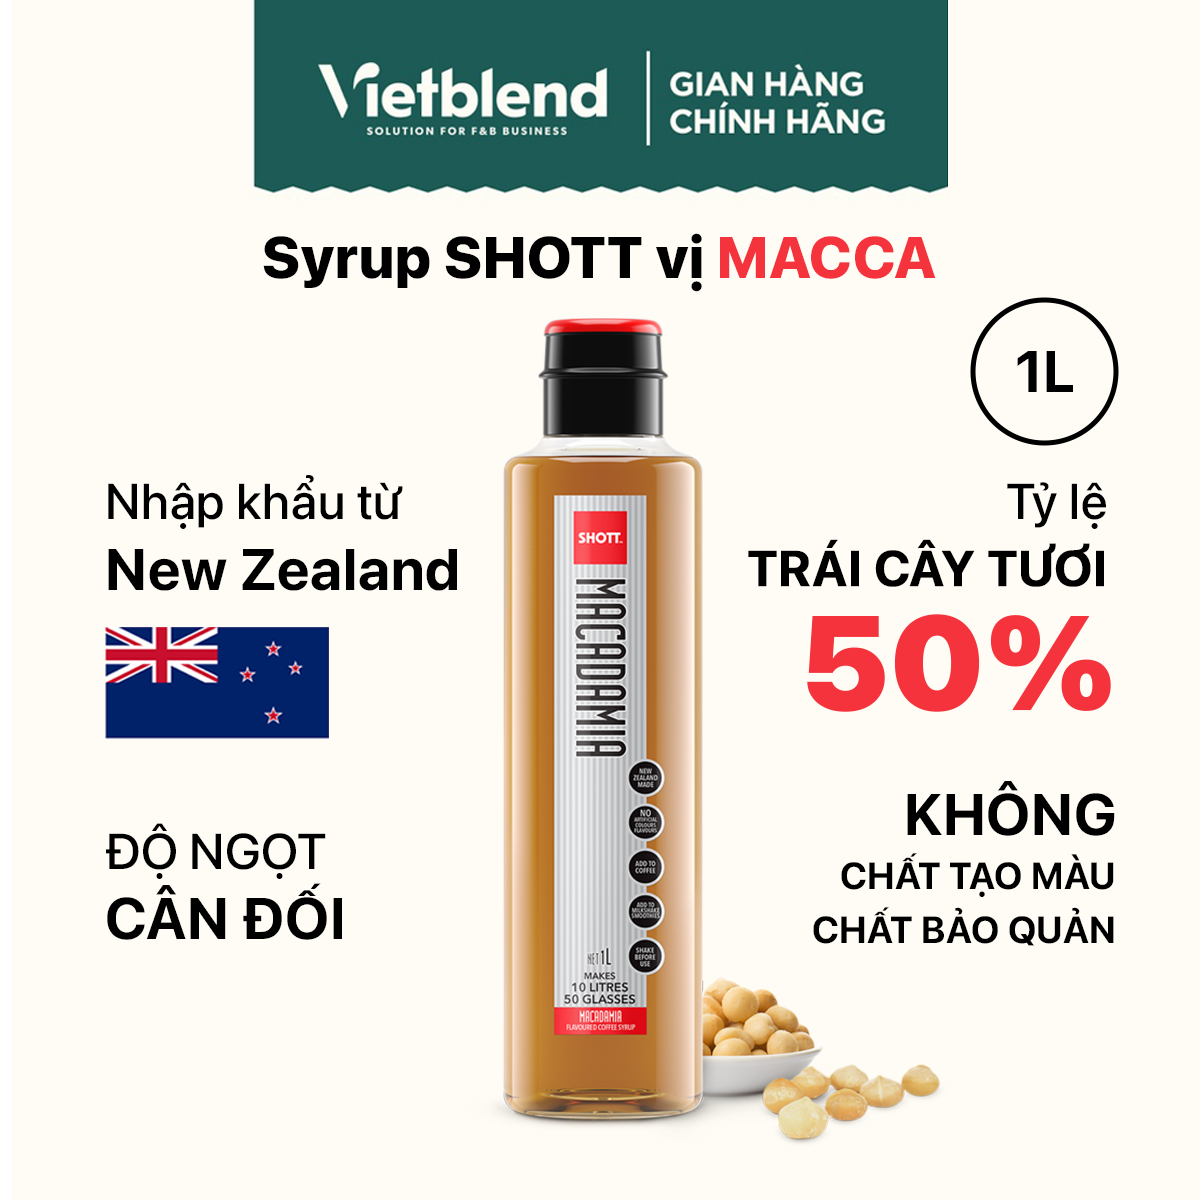 SHOTT Syrup Macadamia Flavor 1 Liter Bottle - Beverage Mixing Ingredient